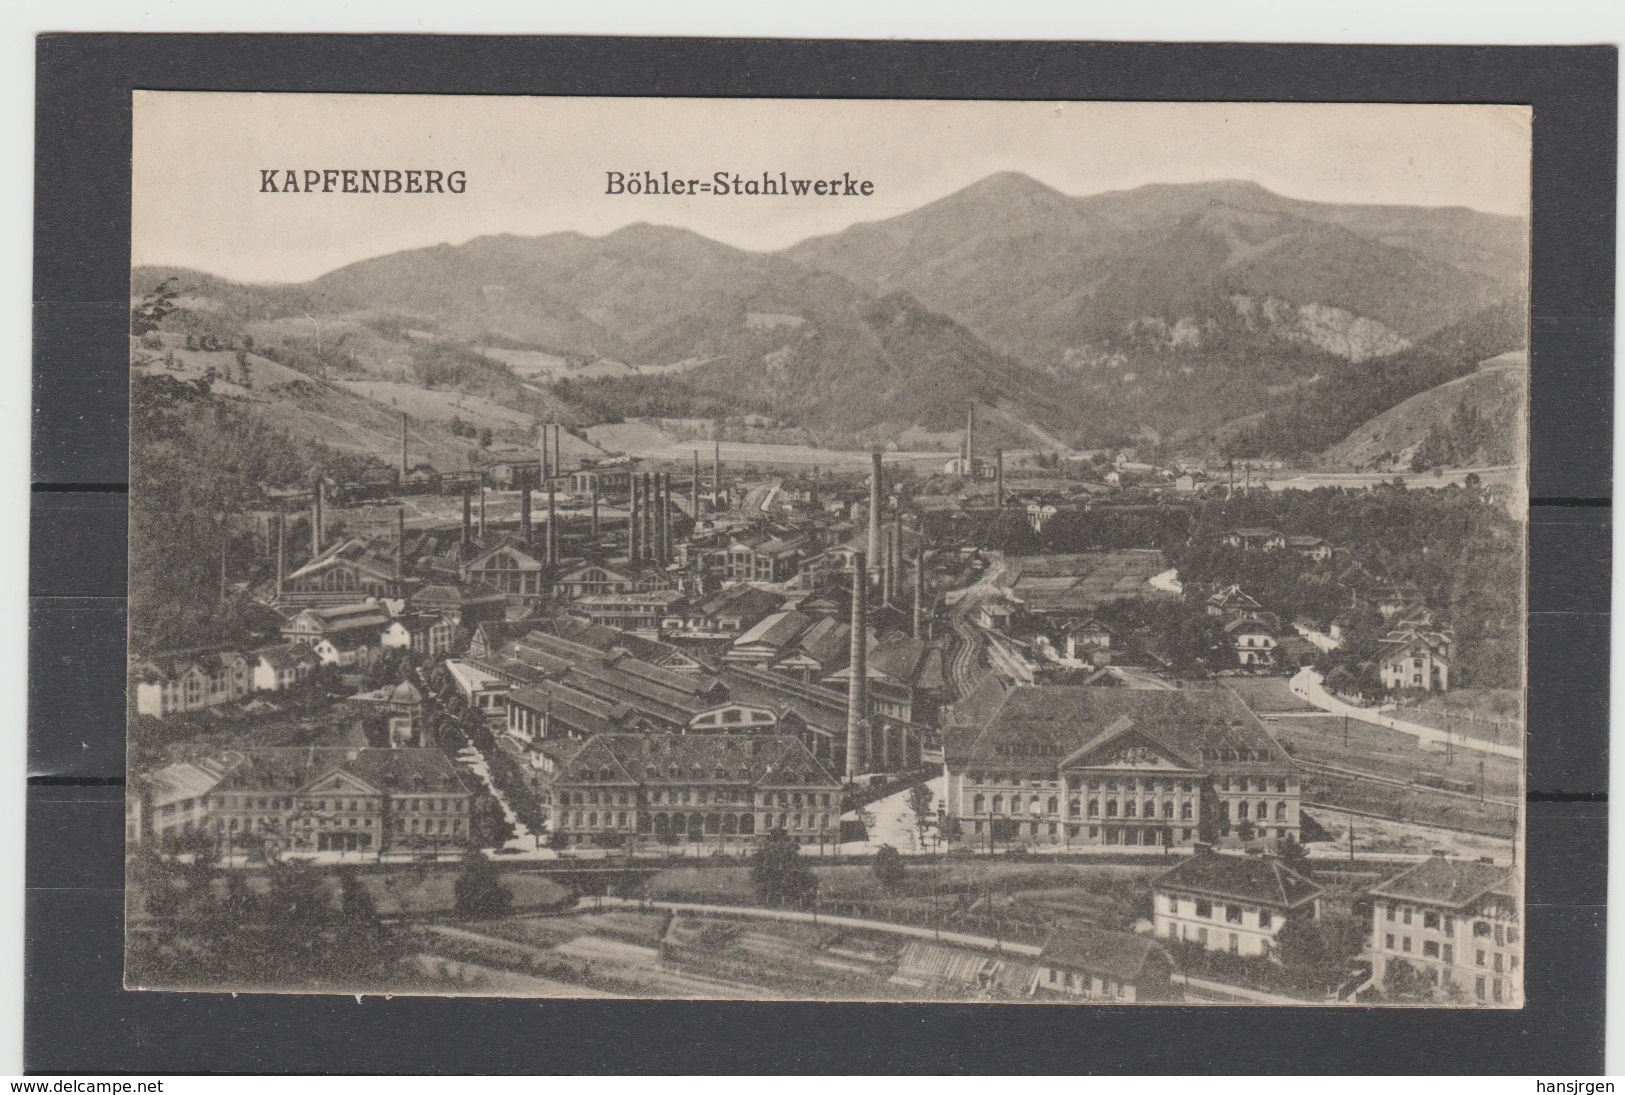 STM314 ANSICHTSKARTE JAHR 1922 KAPFENBERG BÖHLER STAHLWERKE UNGEBAUCHT - Kapfenberg